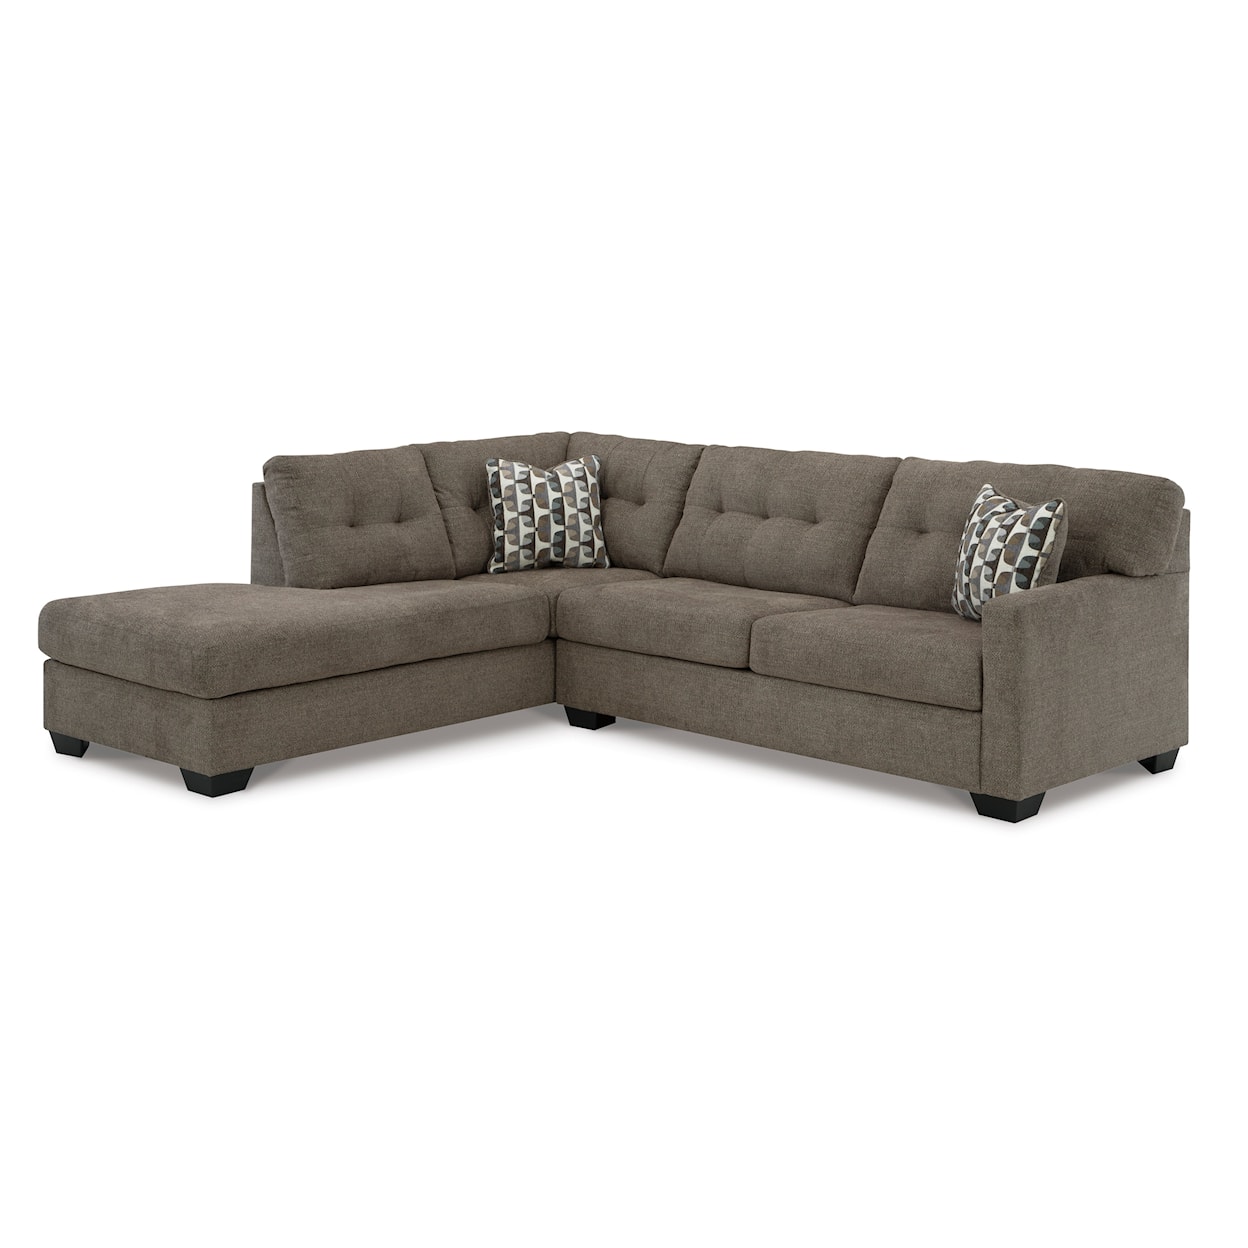 Ashley Furniture Signature Design Mahoney Sectional Sleeper Sofa